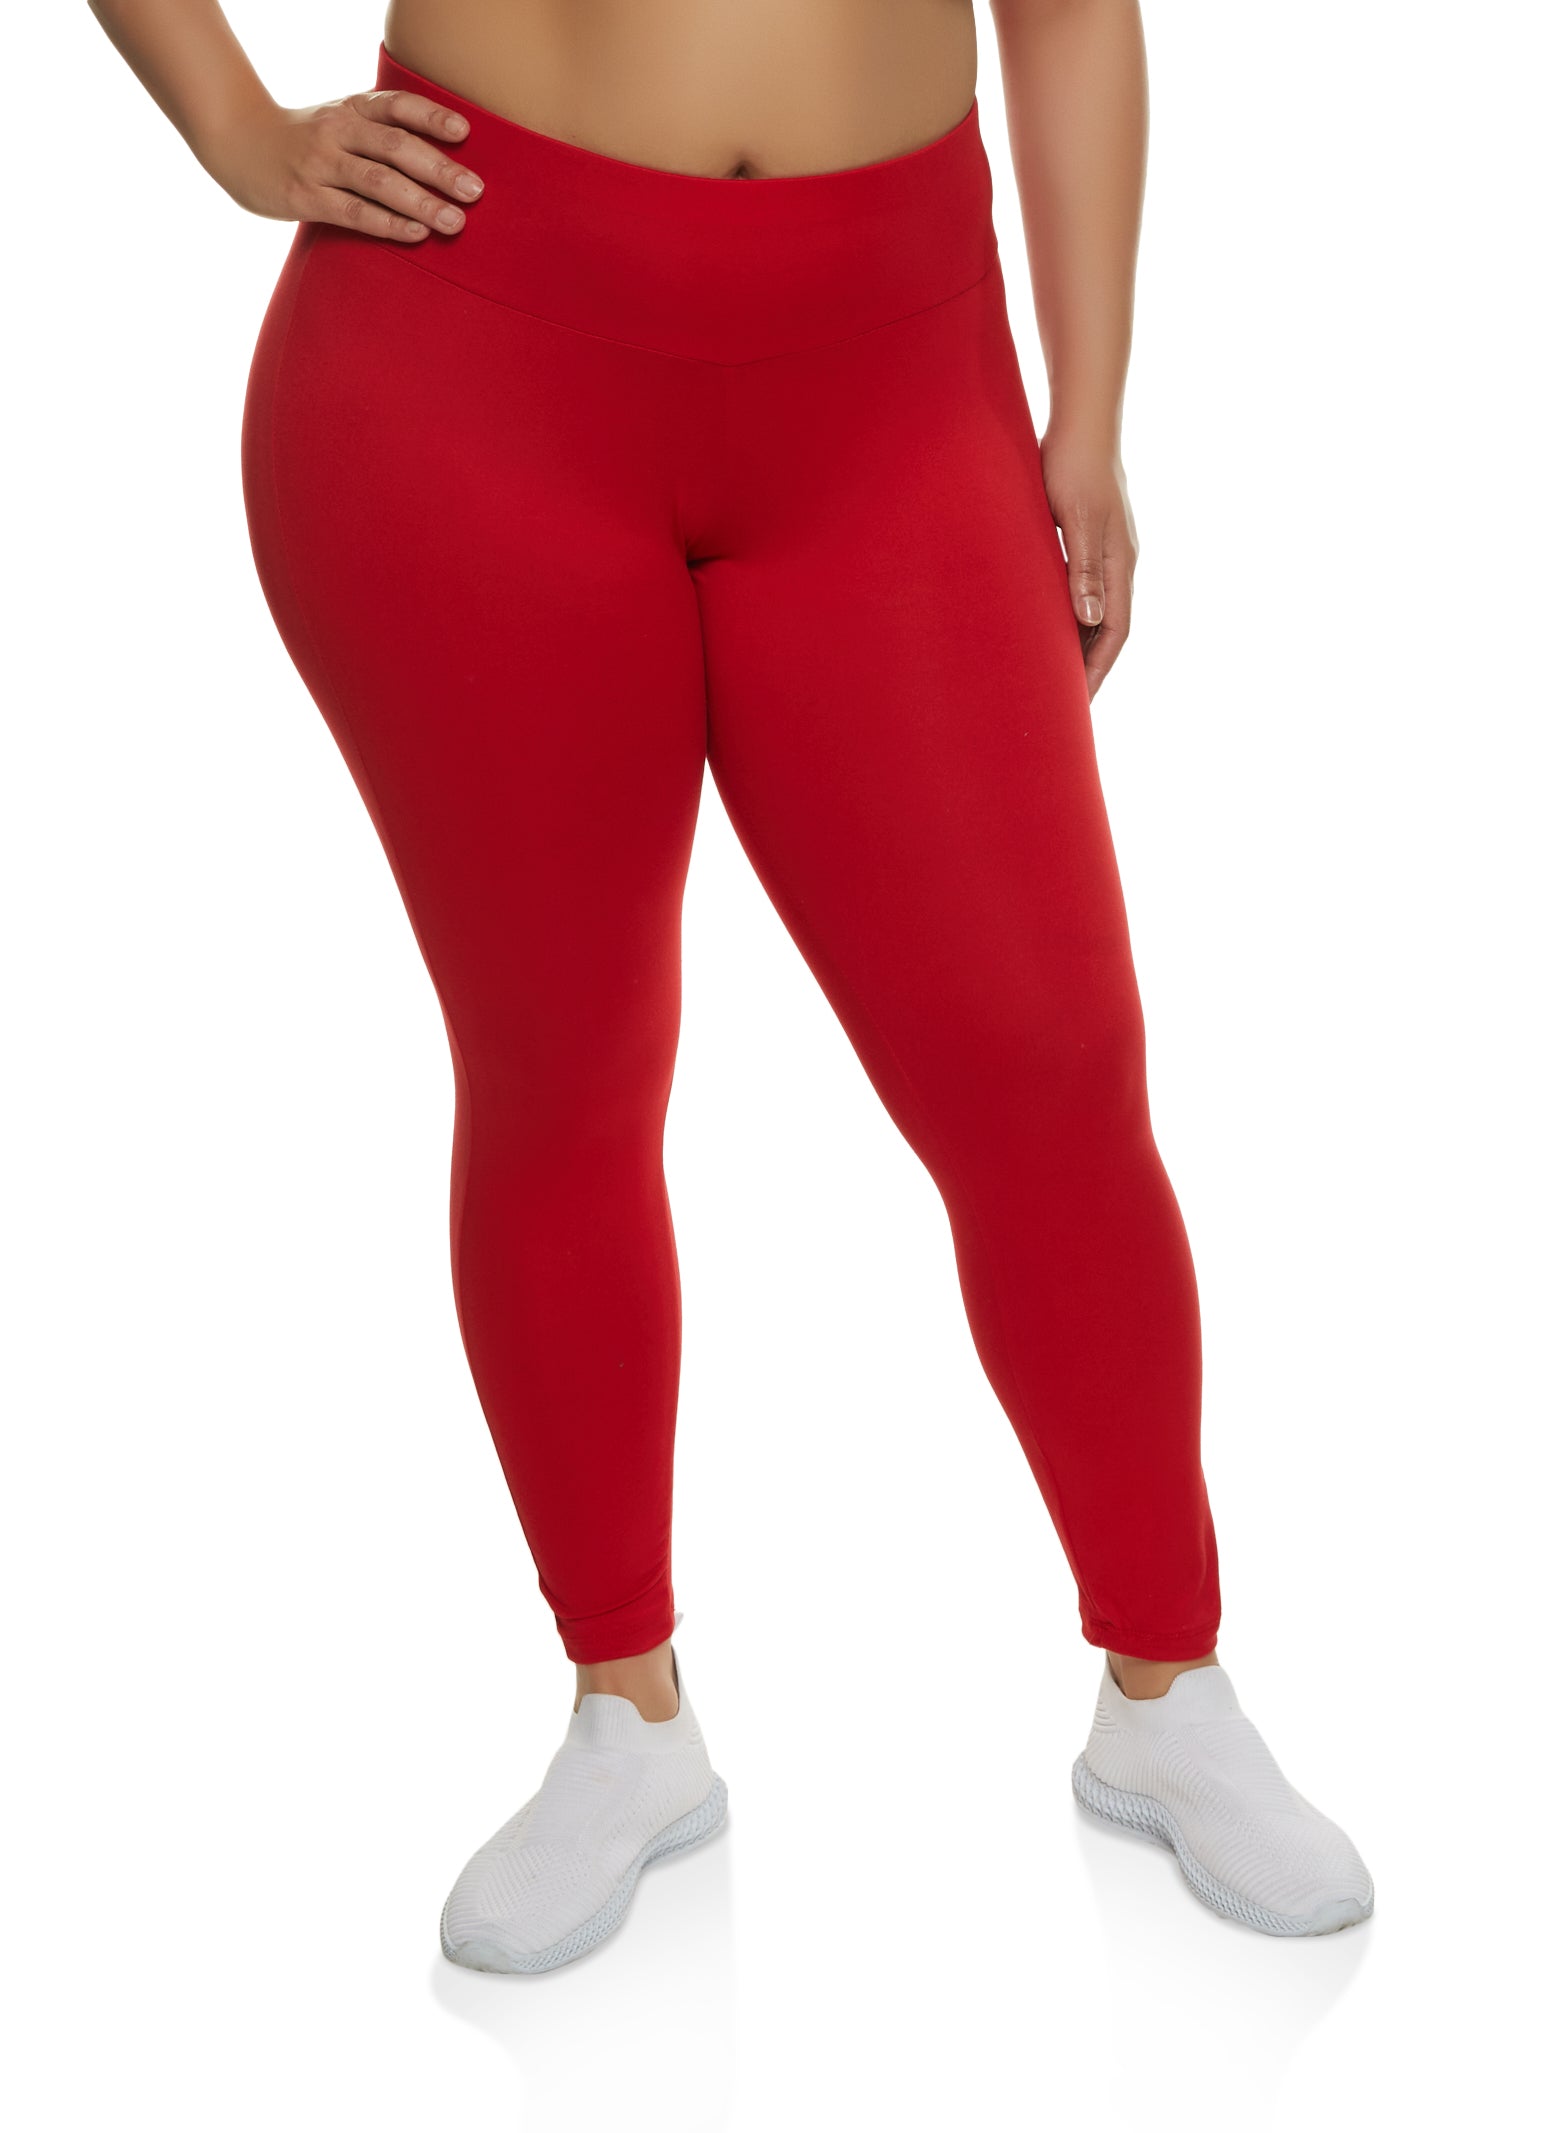 LEG-34 {Puzzled} Gray/Red Puzzle Print Leggings EXTENDED PLUS SIZE 3X/ –  Curvy Boutique Plus Size Clothing